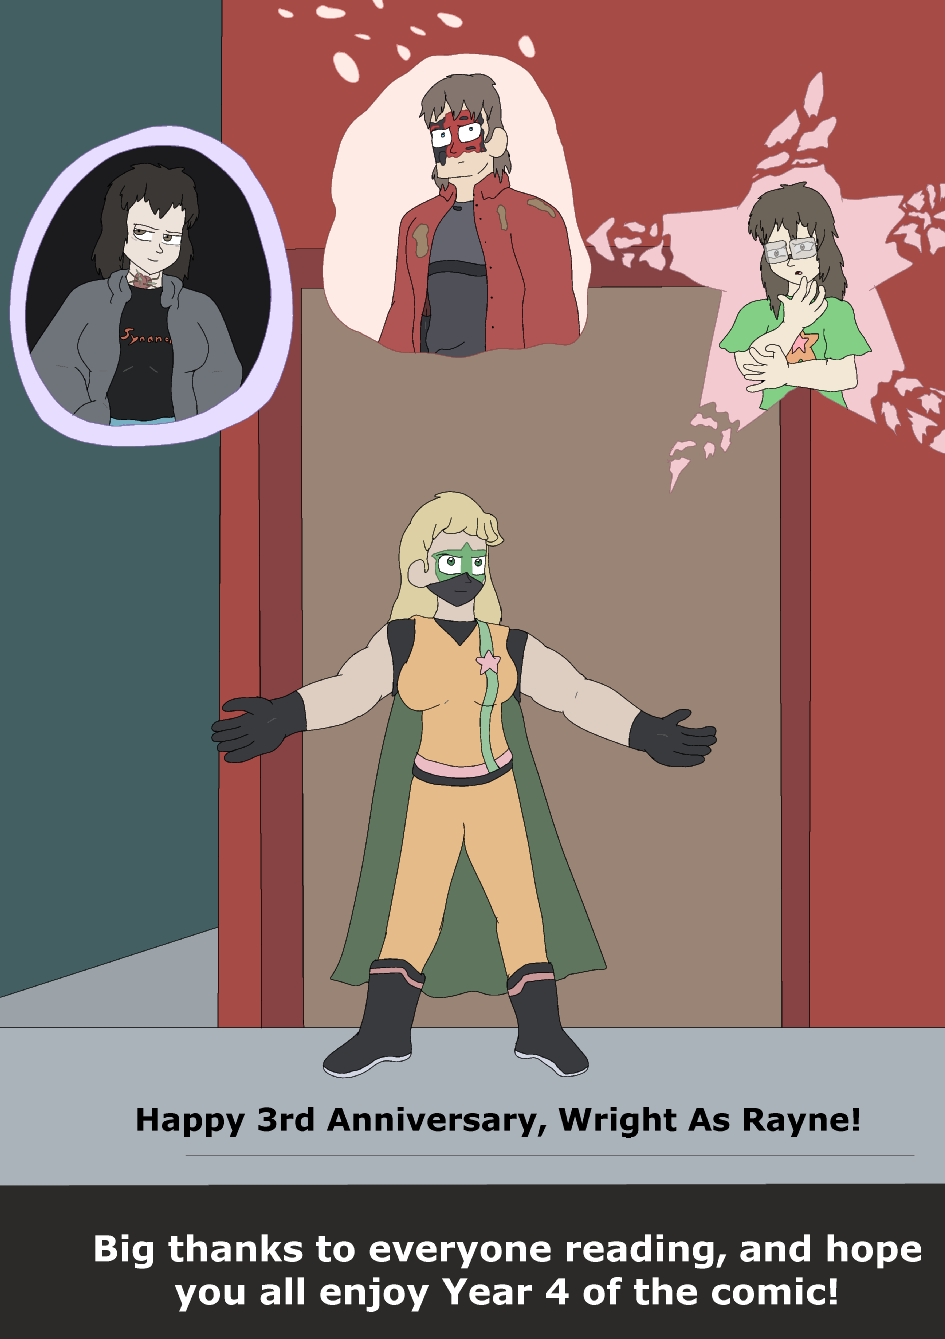 Wright as Rayne's Third Anniversary